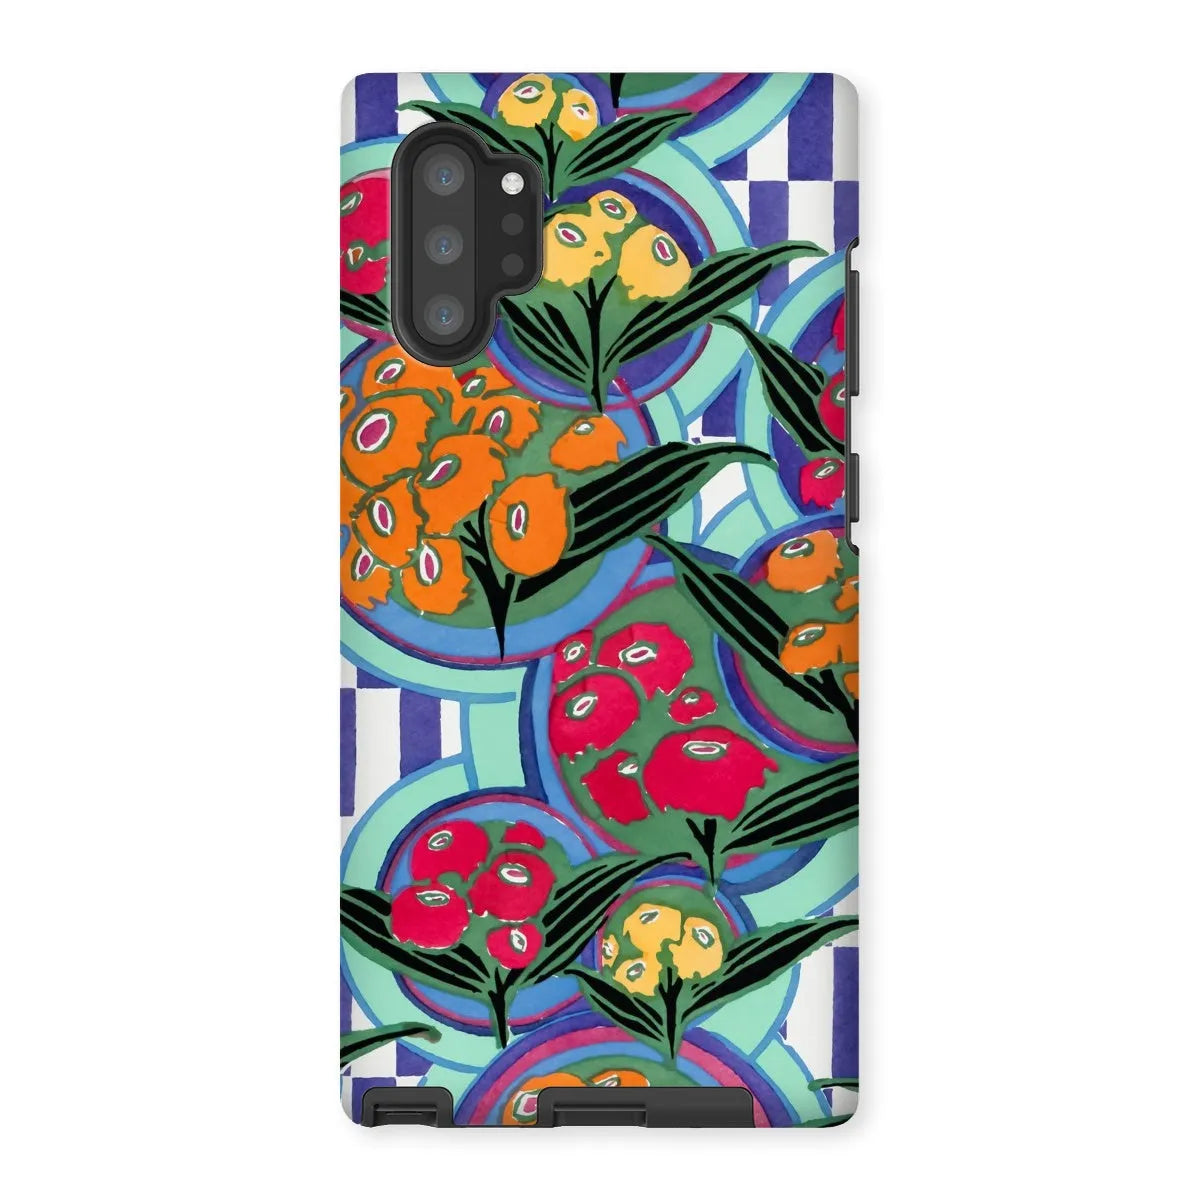 Vibrant Floral Aesthetic Art Phone Case - E.a. Séguy - Samsung Galaxy Note 10p / Matte - Mobile Phone Cases